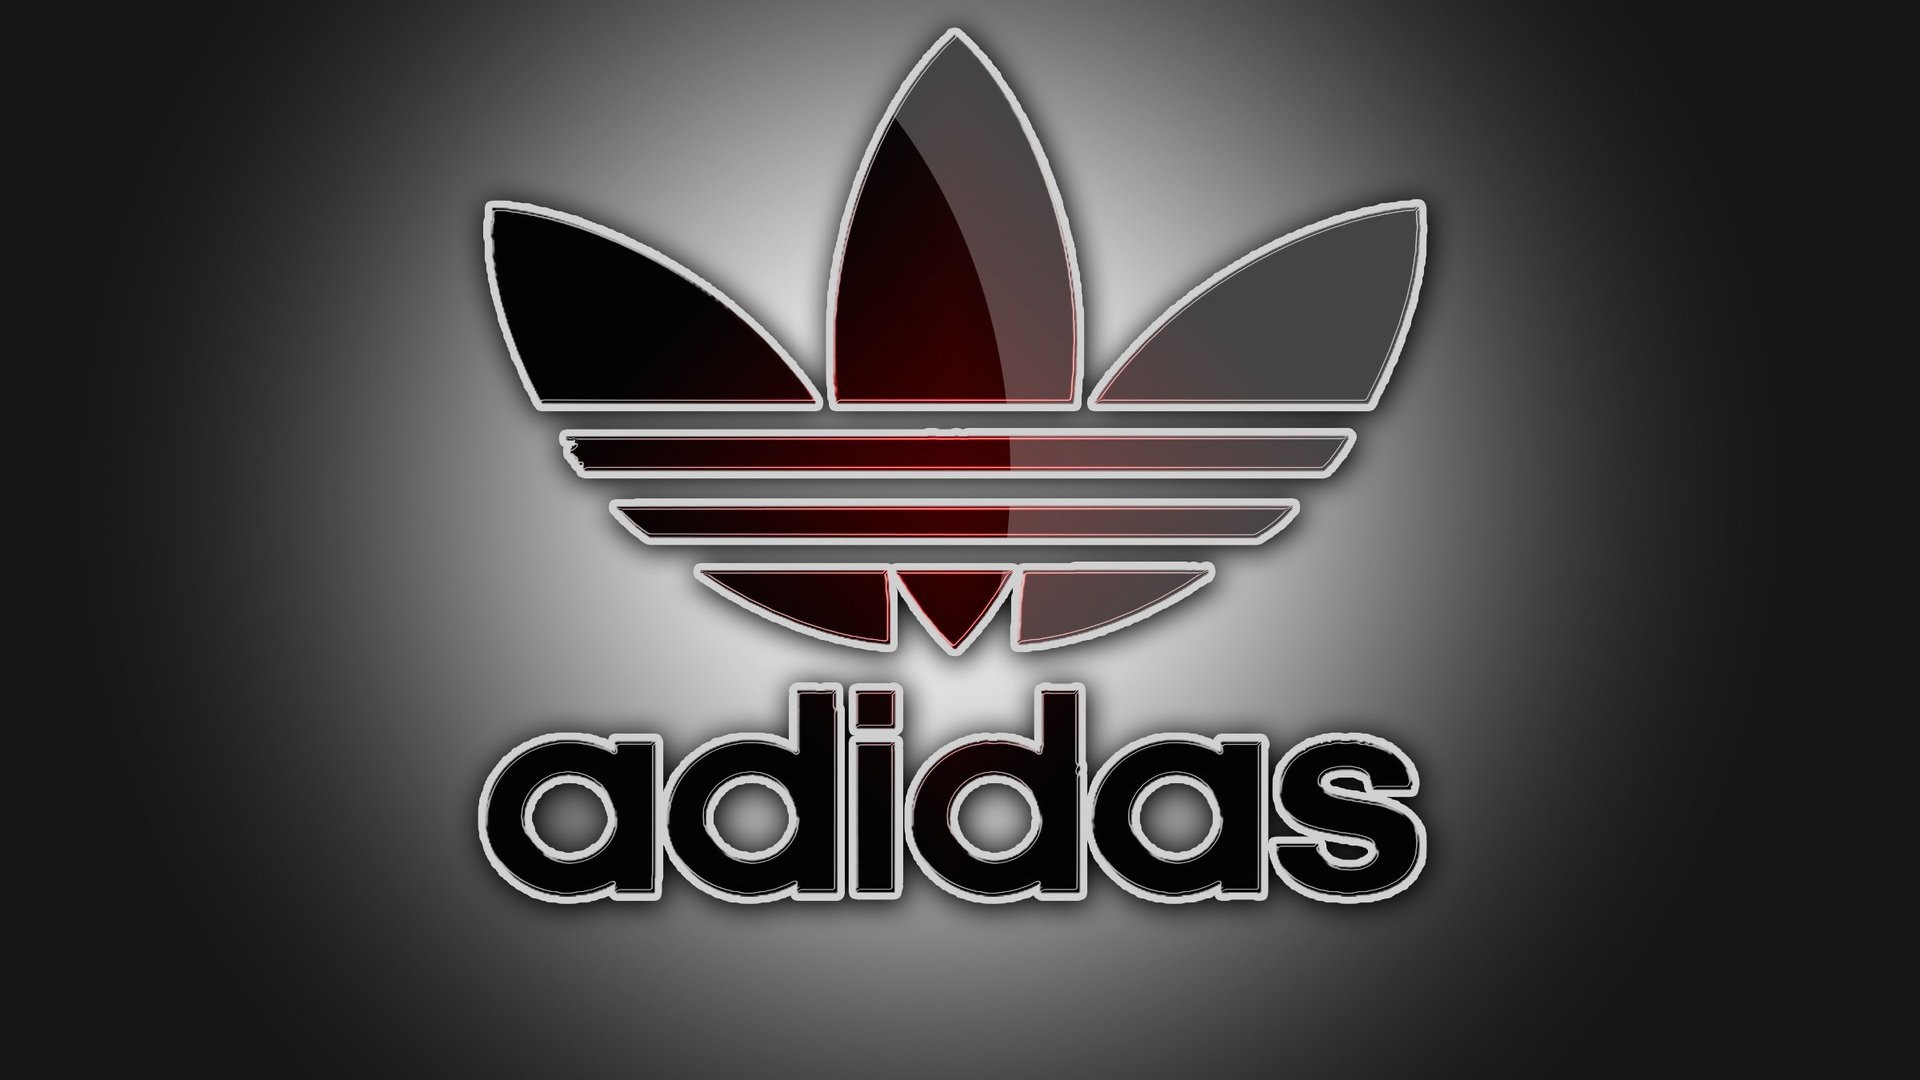 1920x1080 Cool Adidas Logos